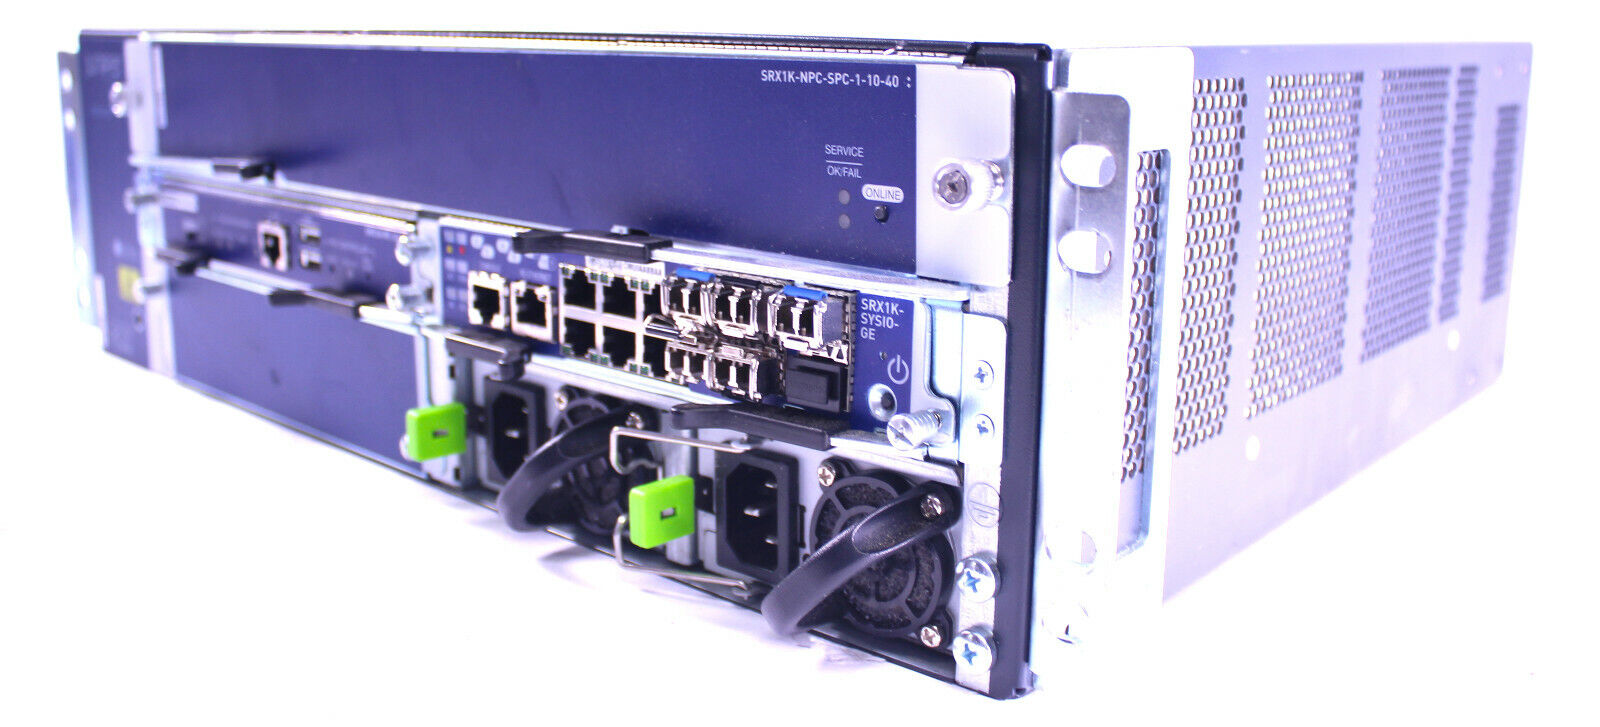 Juniper SRX1400 Services Gateway SRX1K-RE-12-10 NPC-SPC-1-10-40 SYSIO-GE